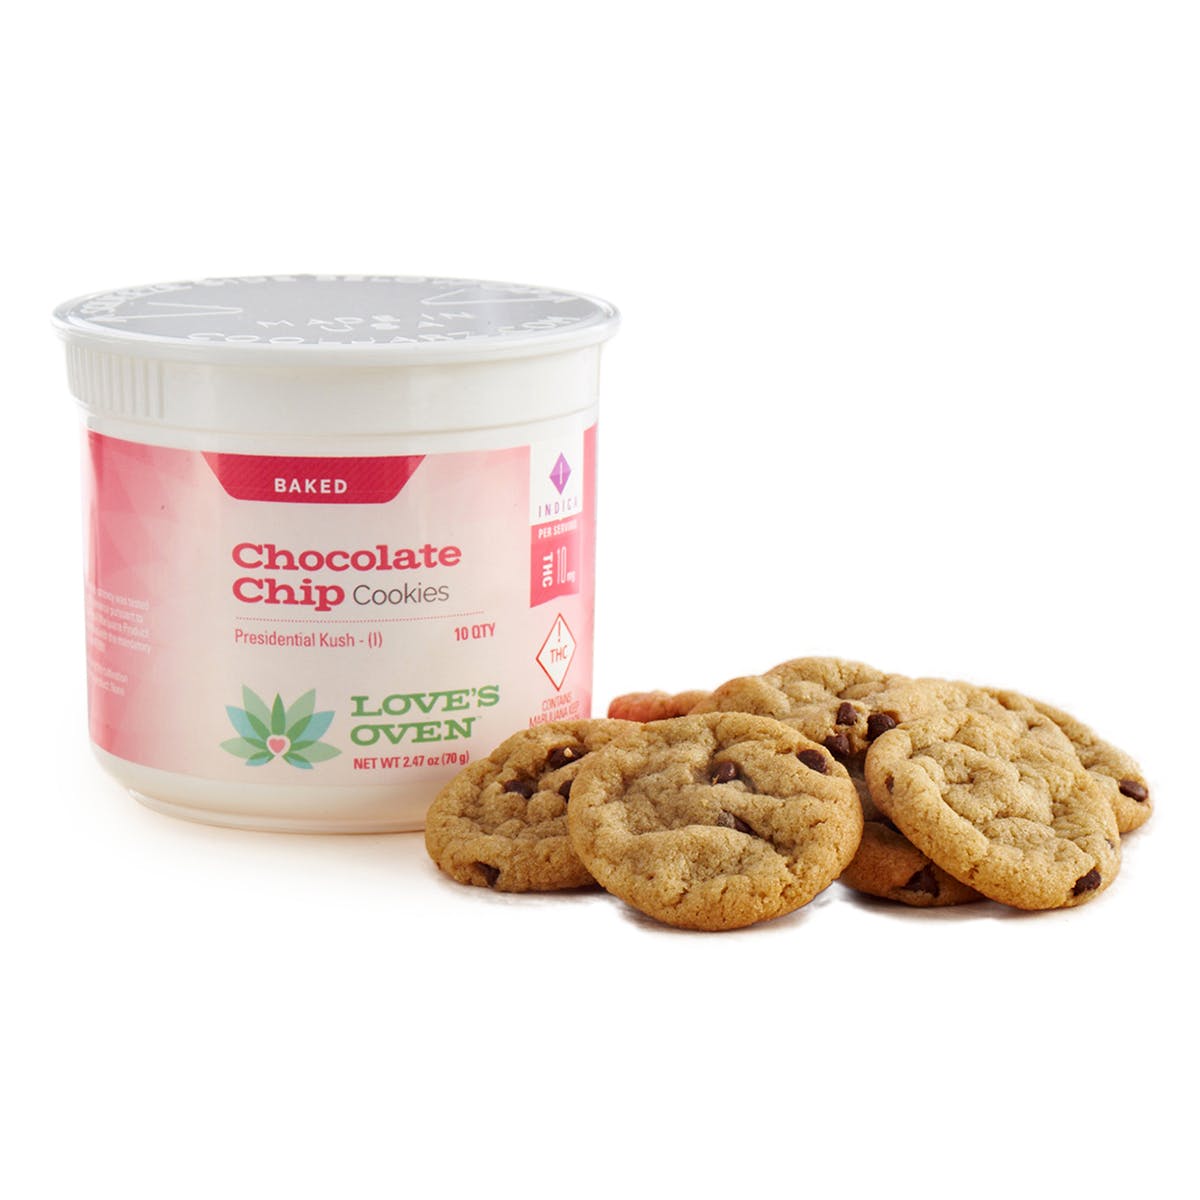 marijuana-dispensaries-the-herbal-center-broadway-rec-in-denver-recreational-chocolate-chip-cookies-2c-100mg